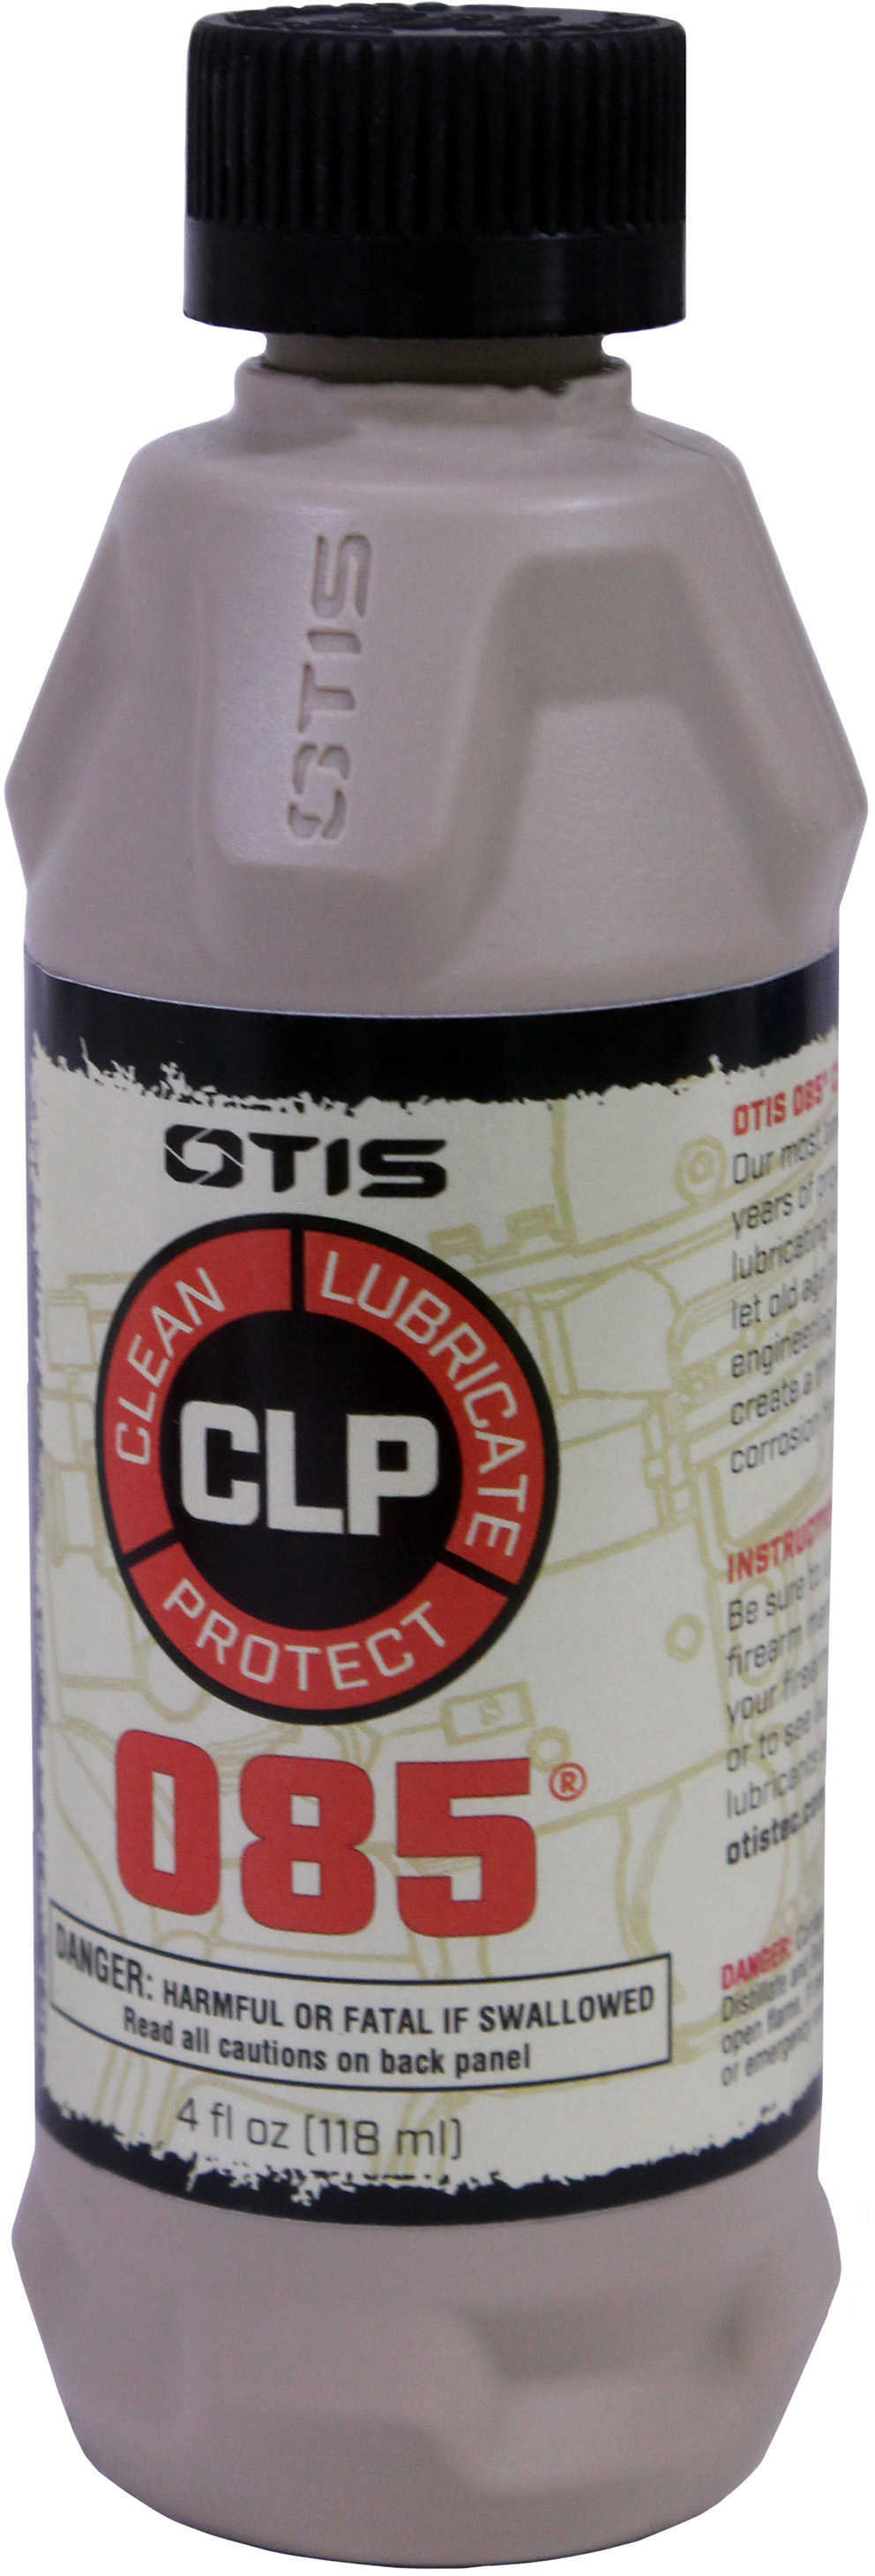 Otis IP-904-085 O85 CLP Cleaner/Lubricant/Protectant 4 oz